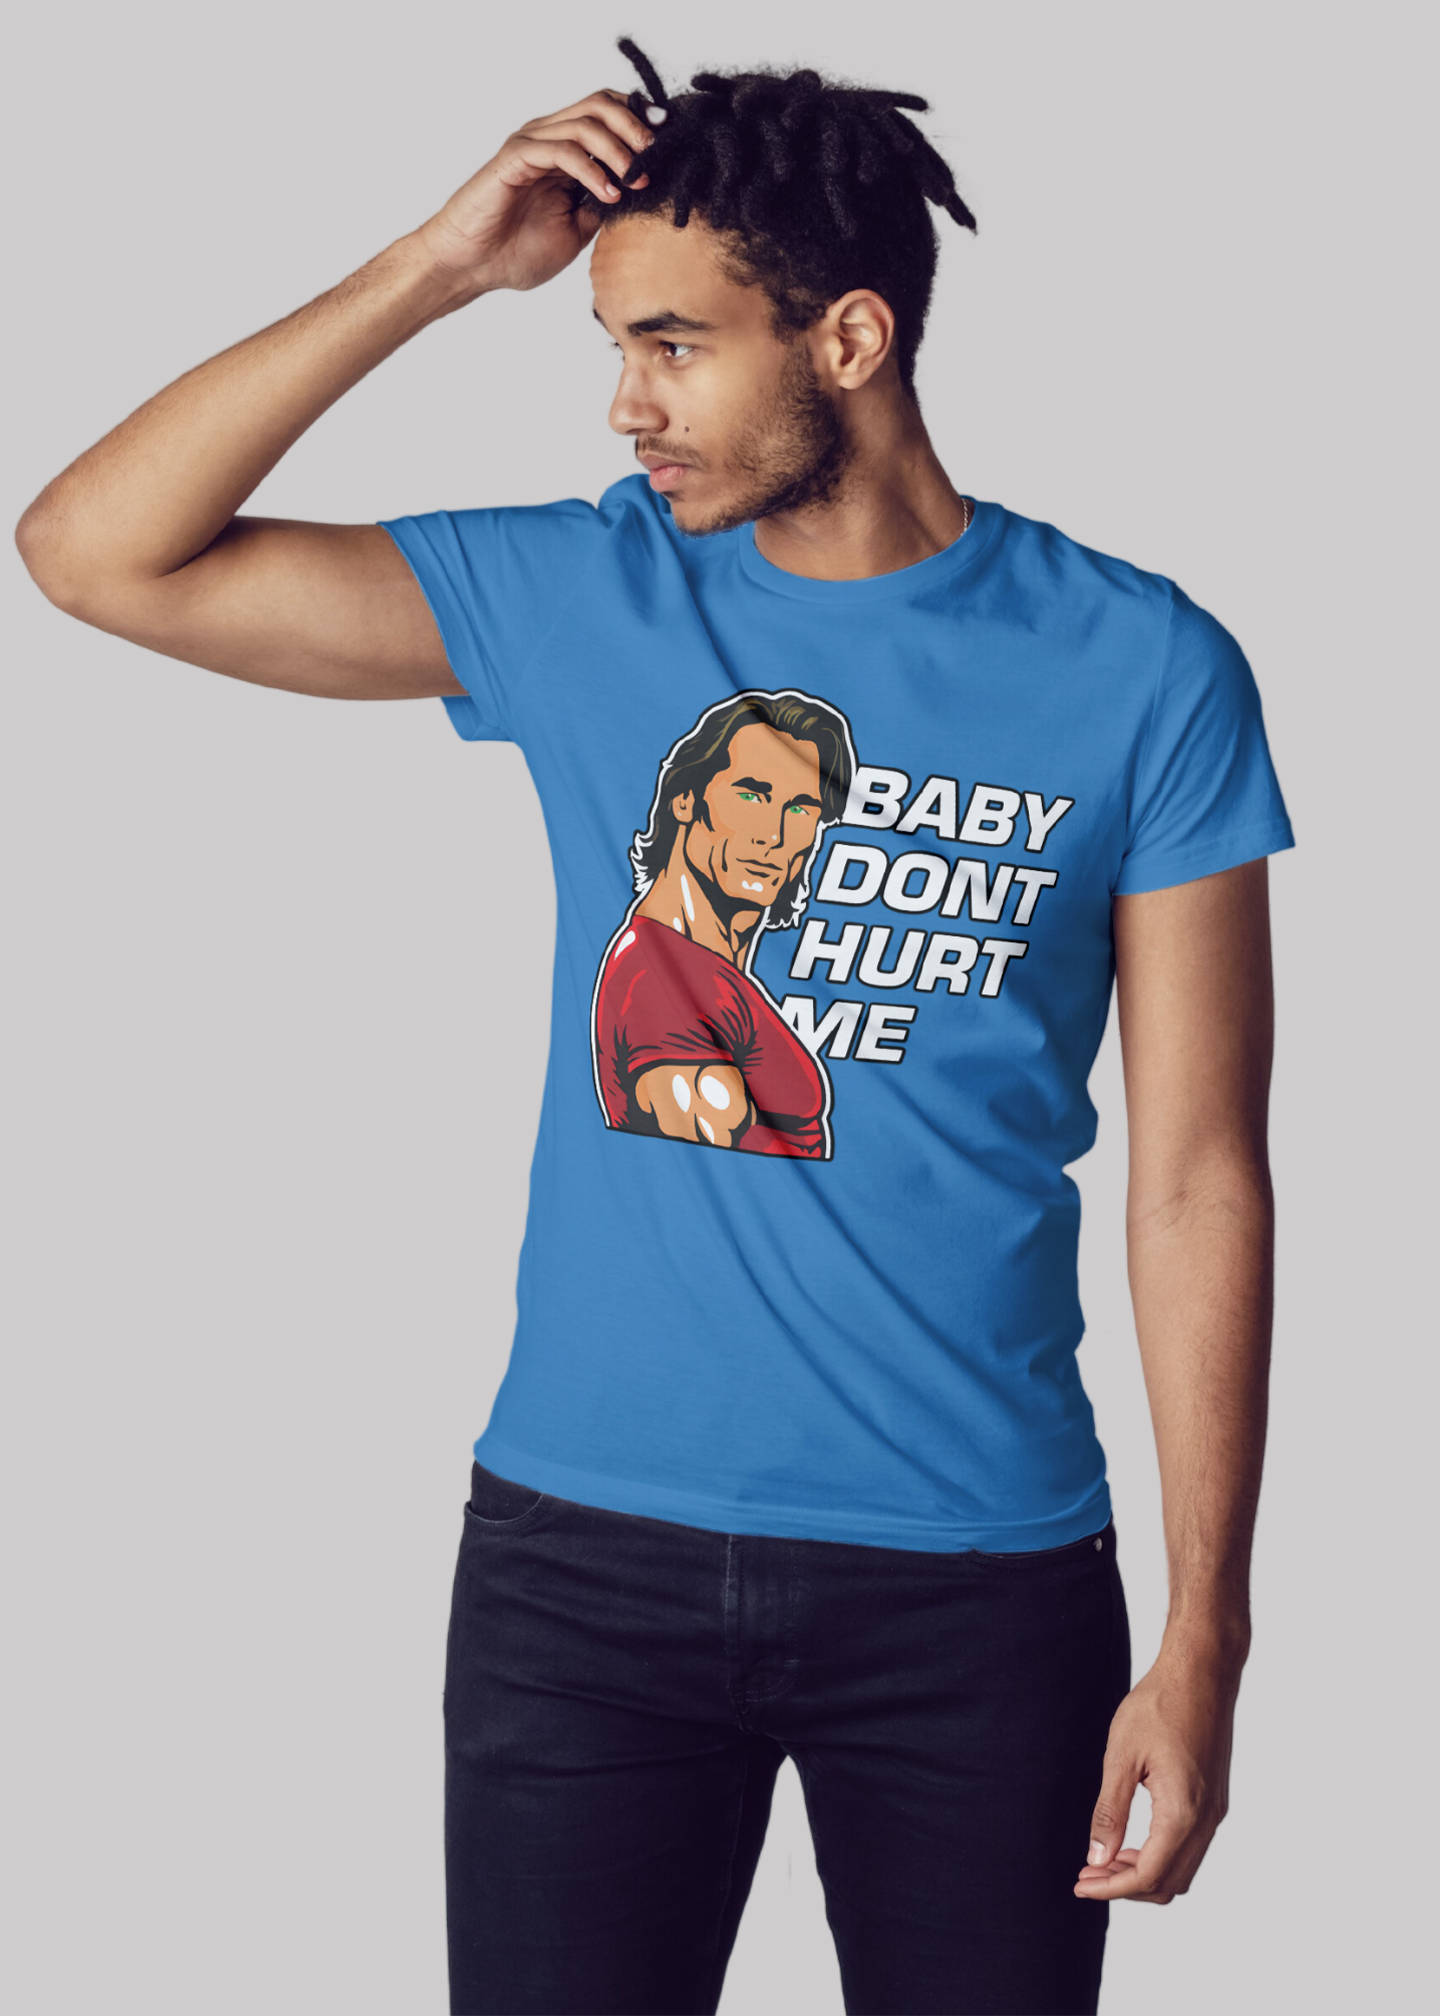 Baby don't hurt me Printed Half Sleeve Premium Cotton T-shirt For Men